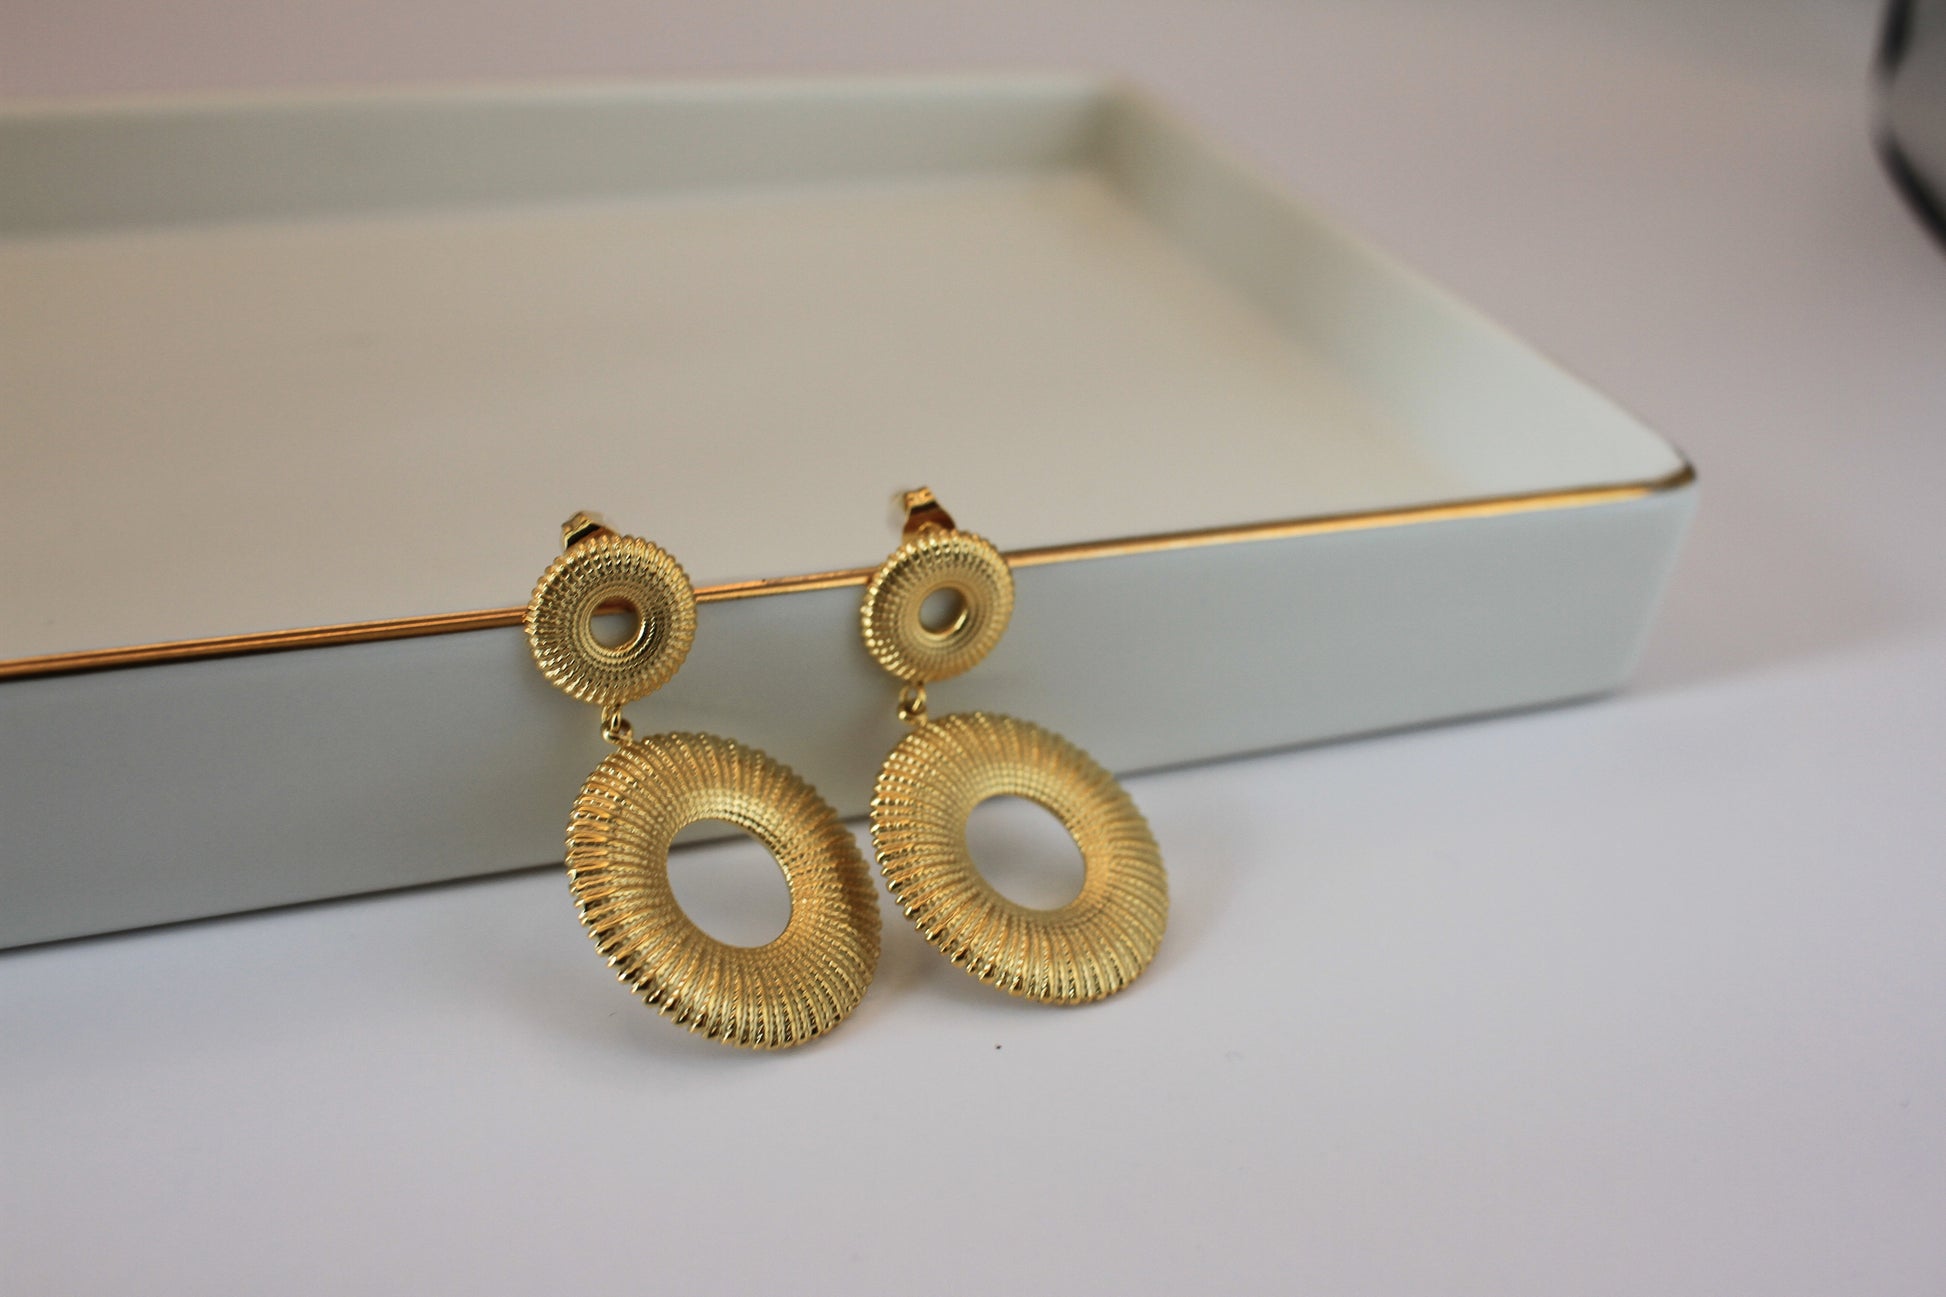 Gold round earrings - Luna by Cinthia Garcia